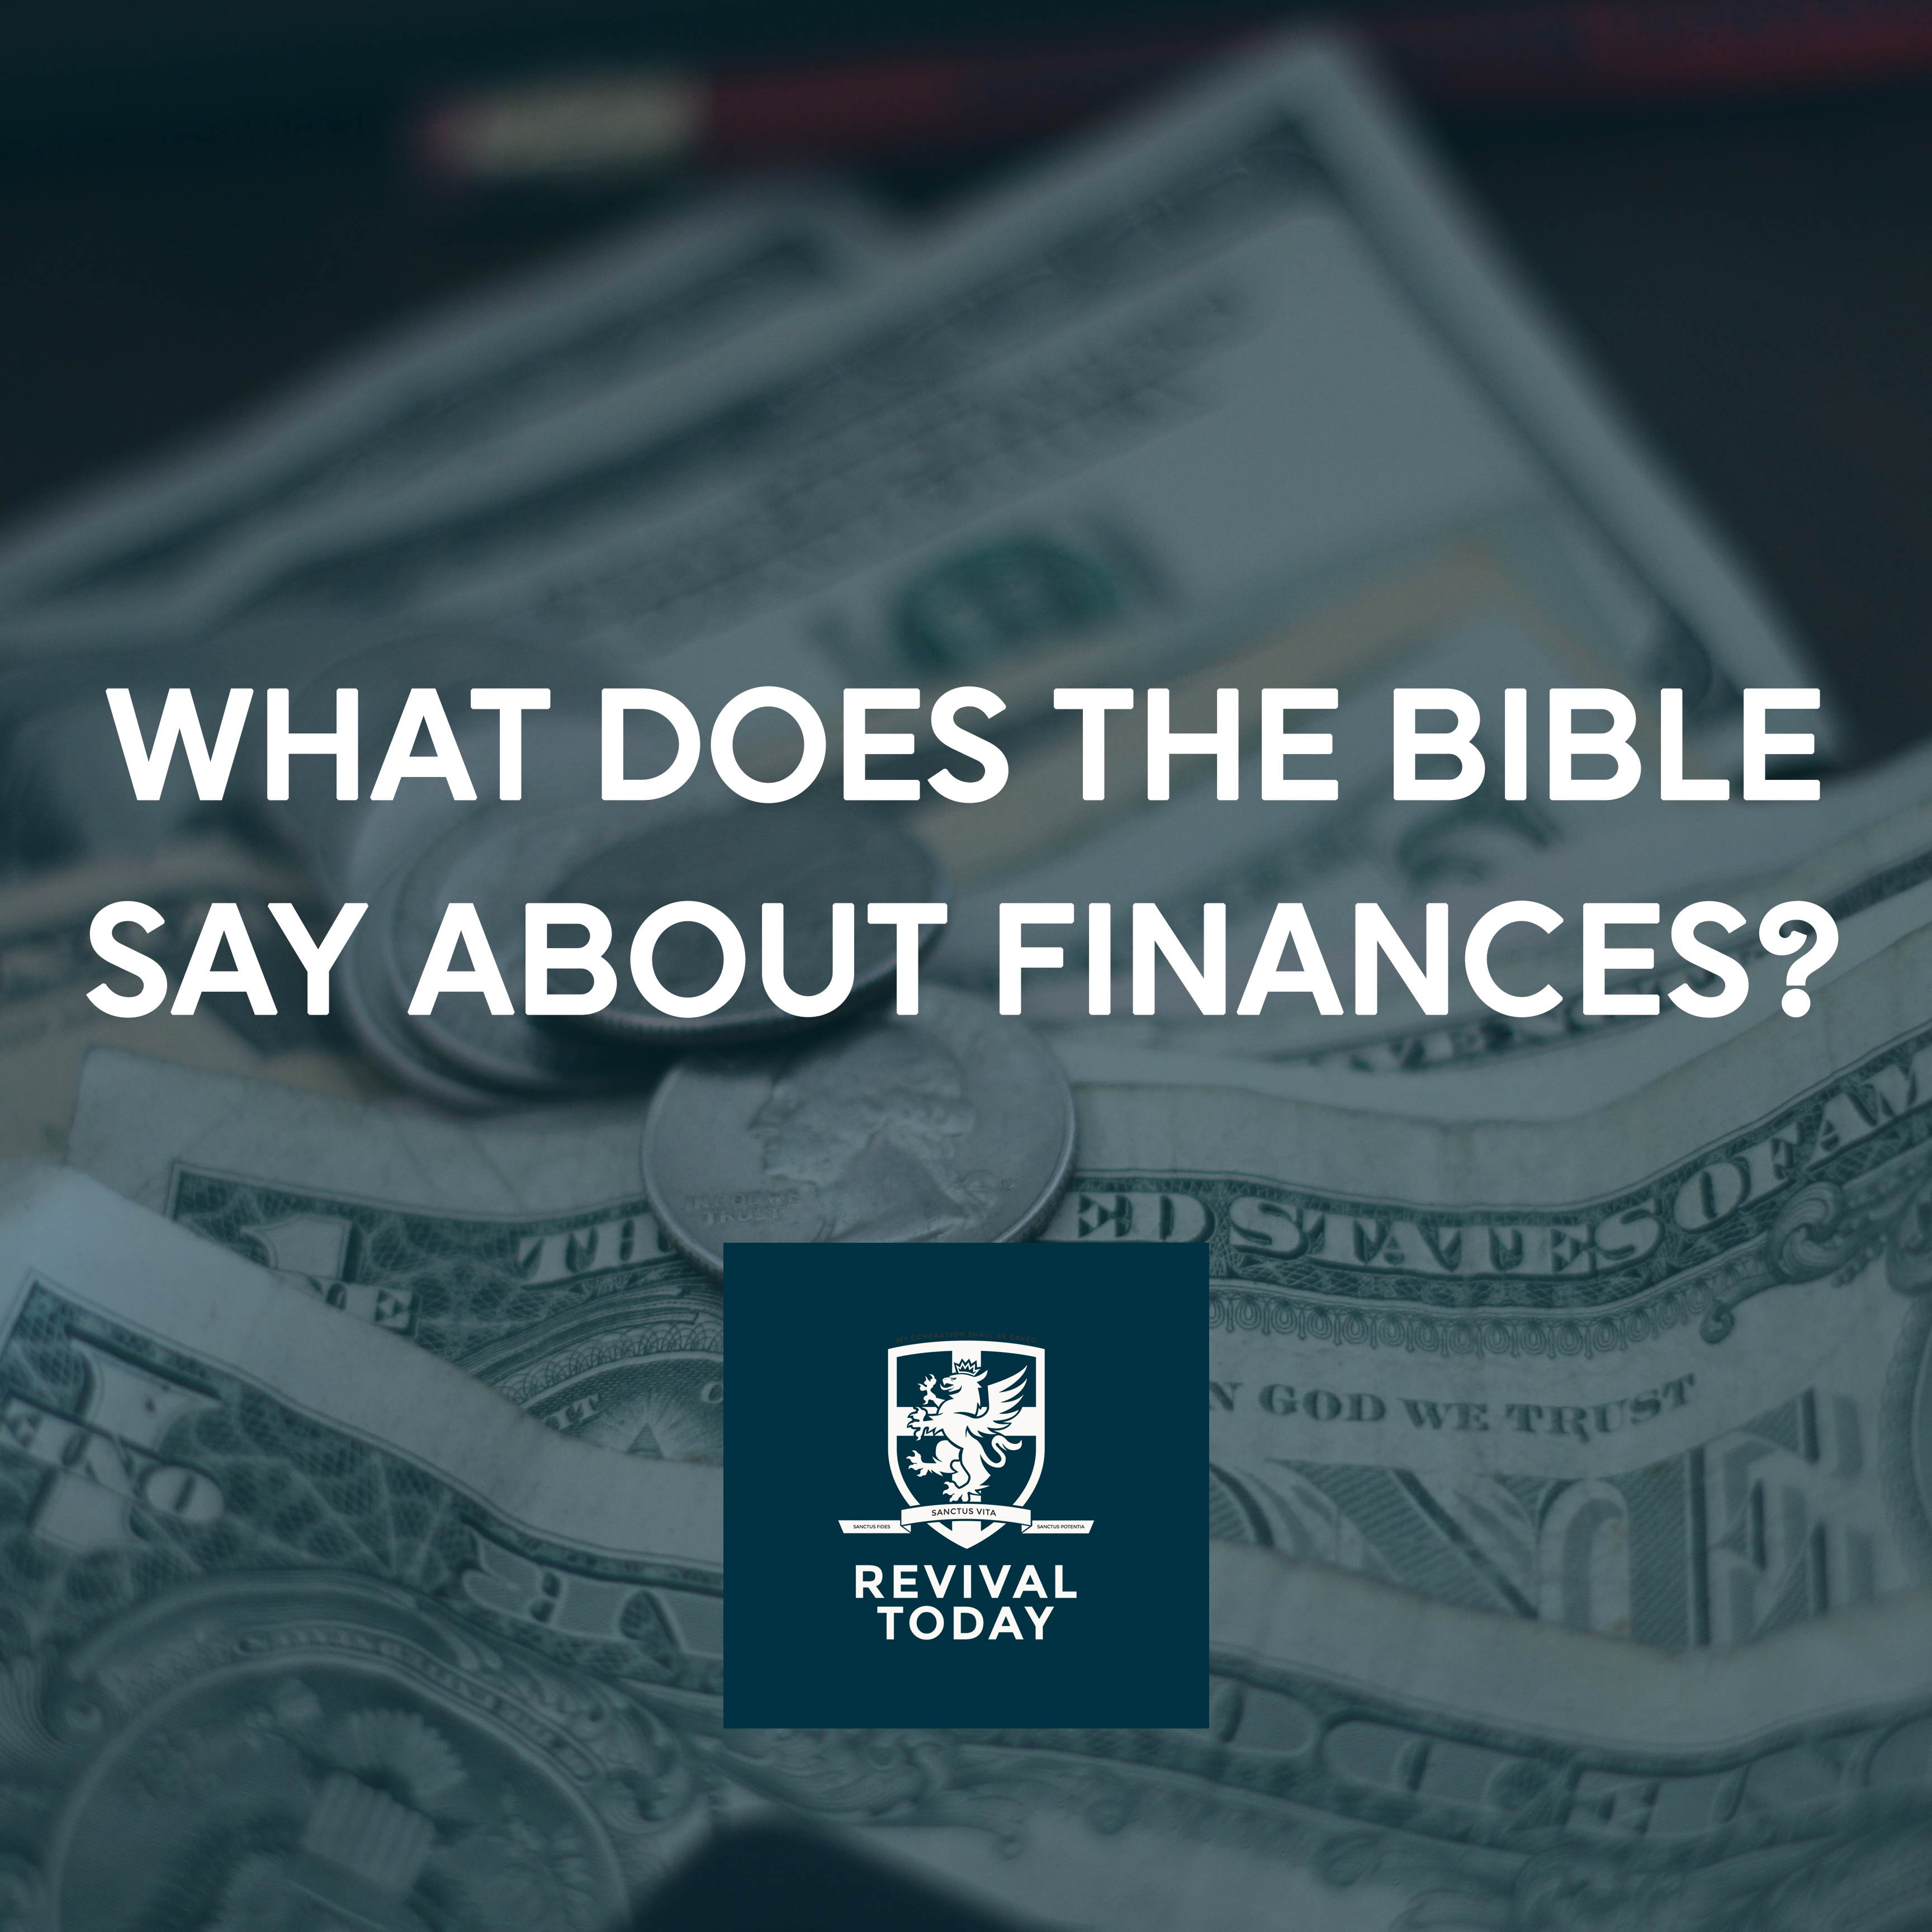 Scriptures about Finances, Revival Today